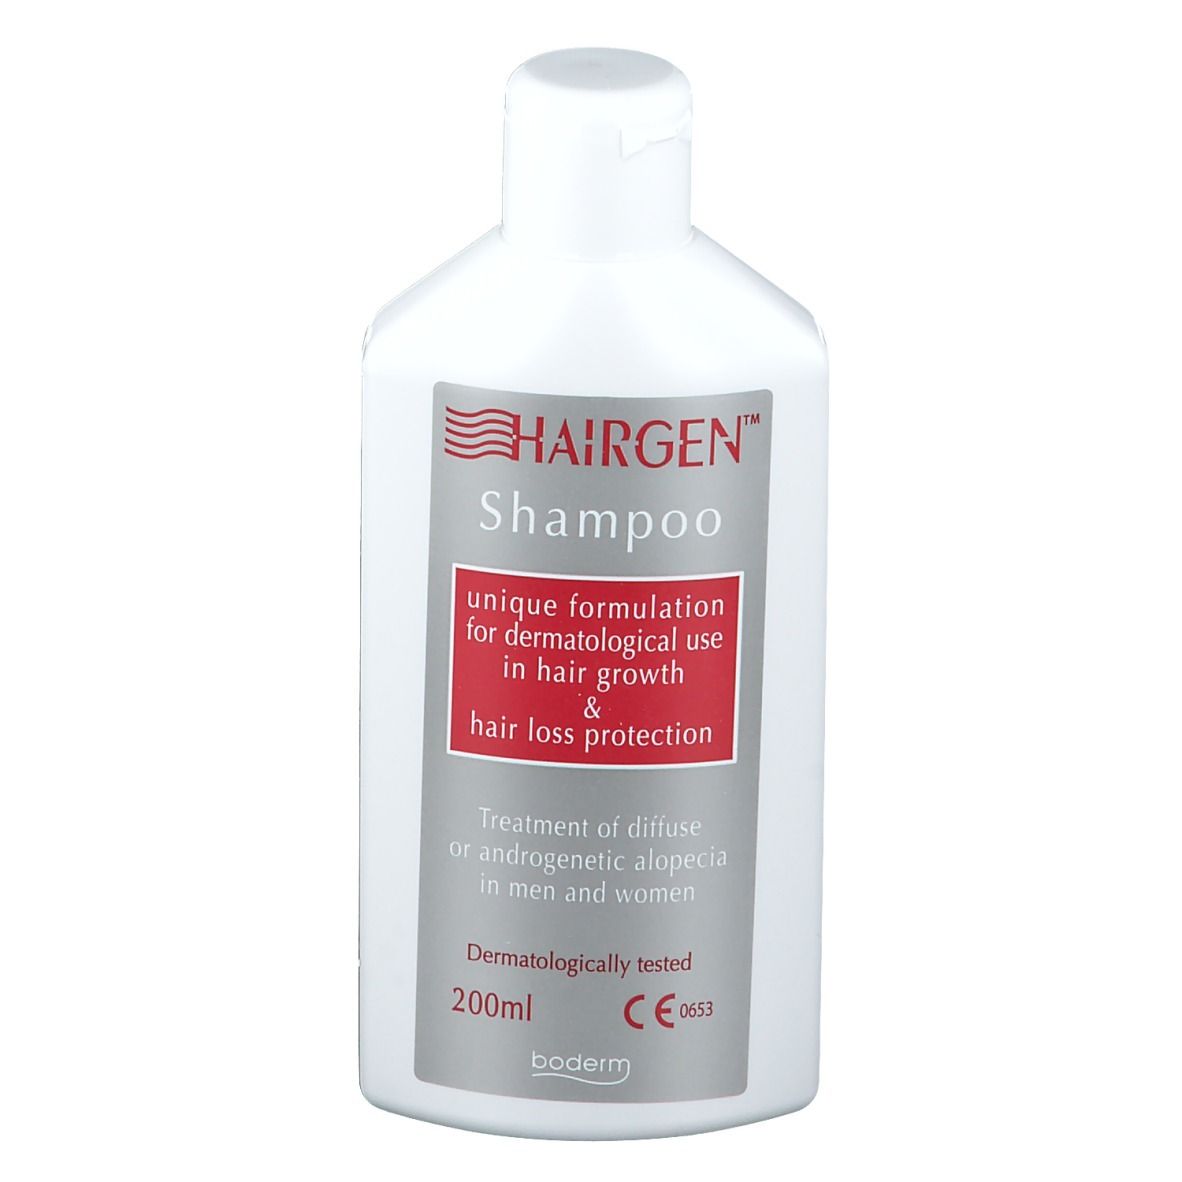 HAIRGEN Shampoo